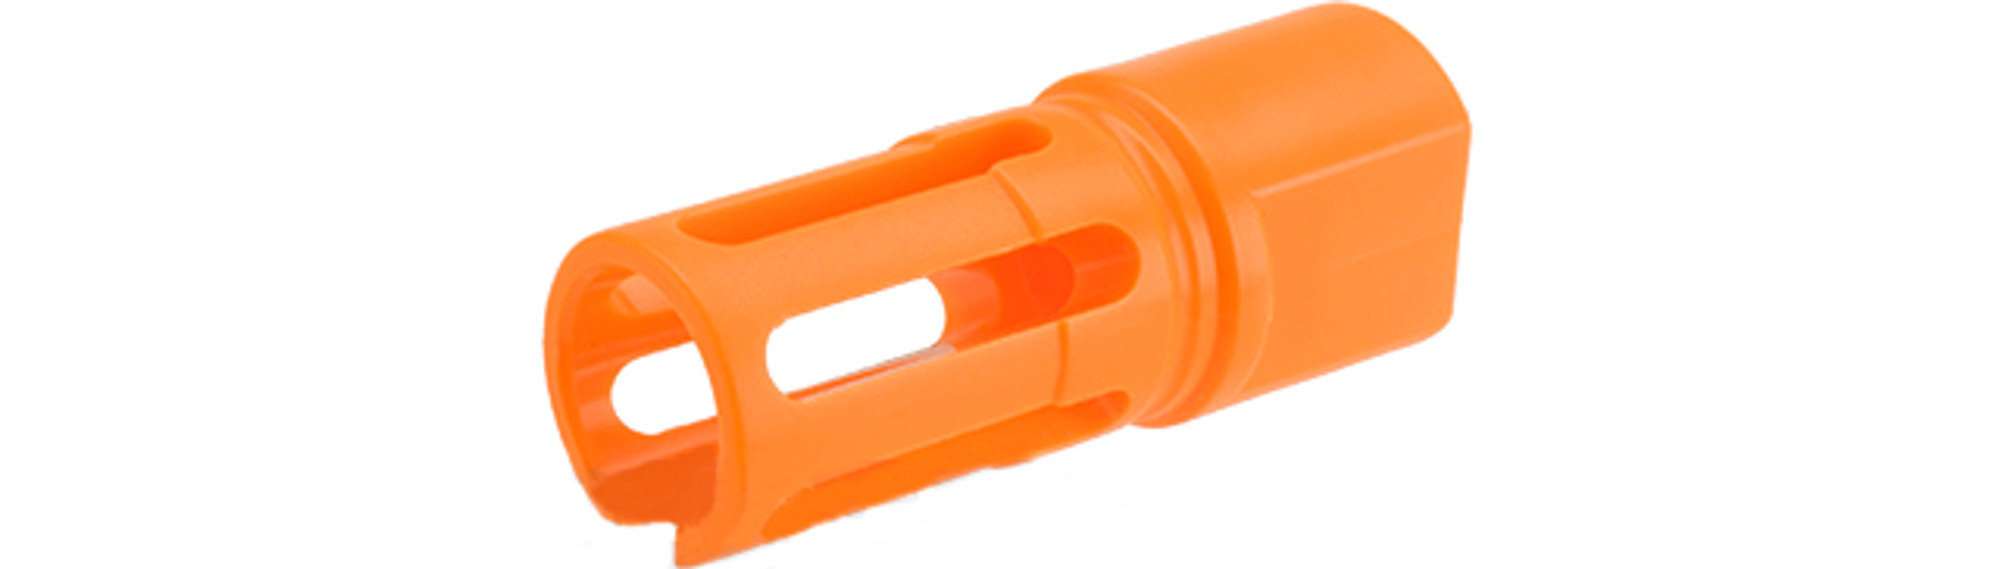 Echo1 MK1 Plastic Orange Flash Hider